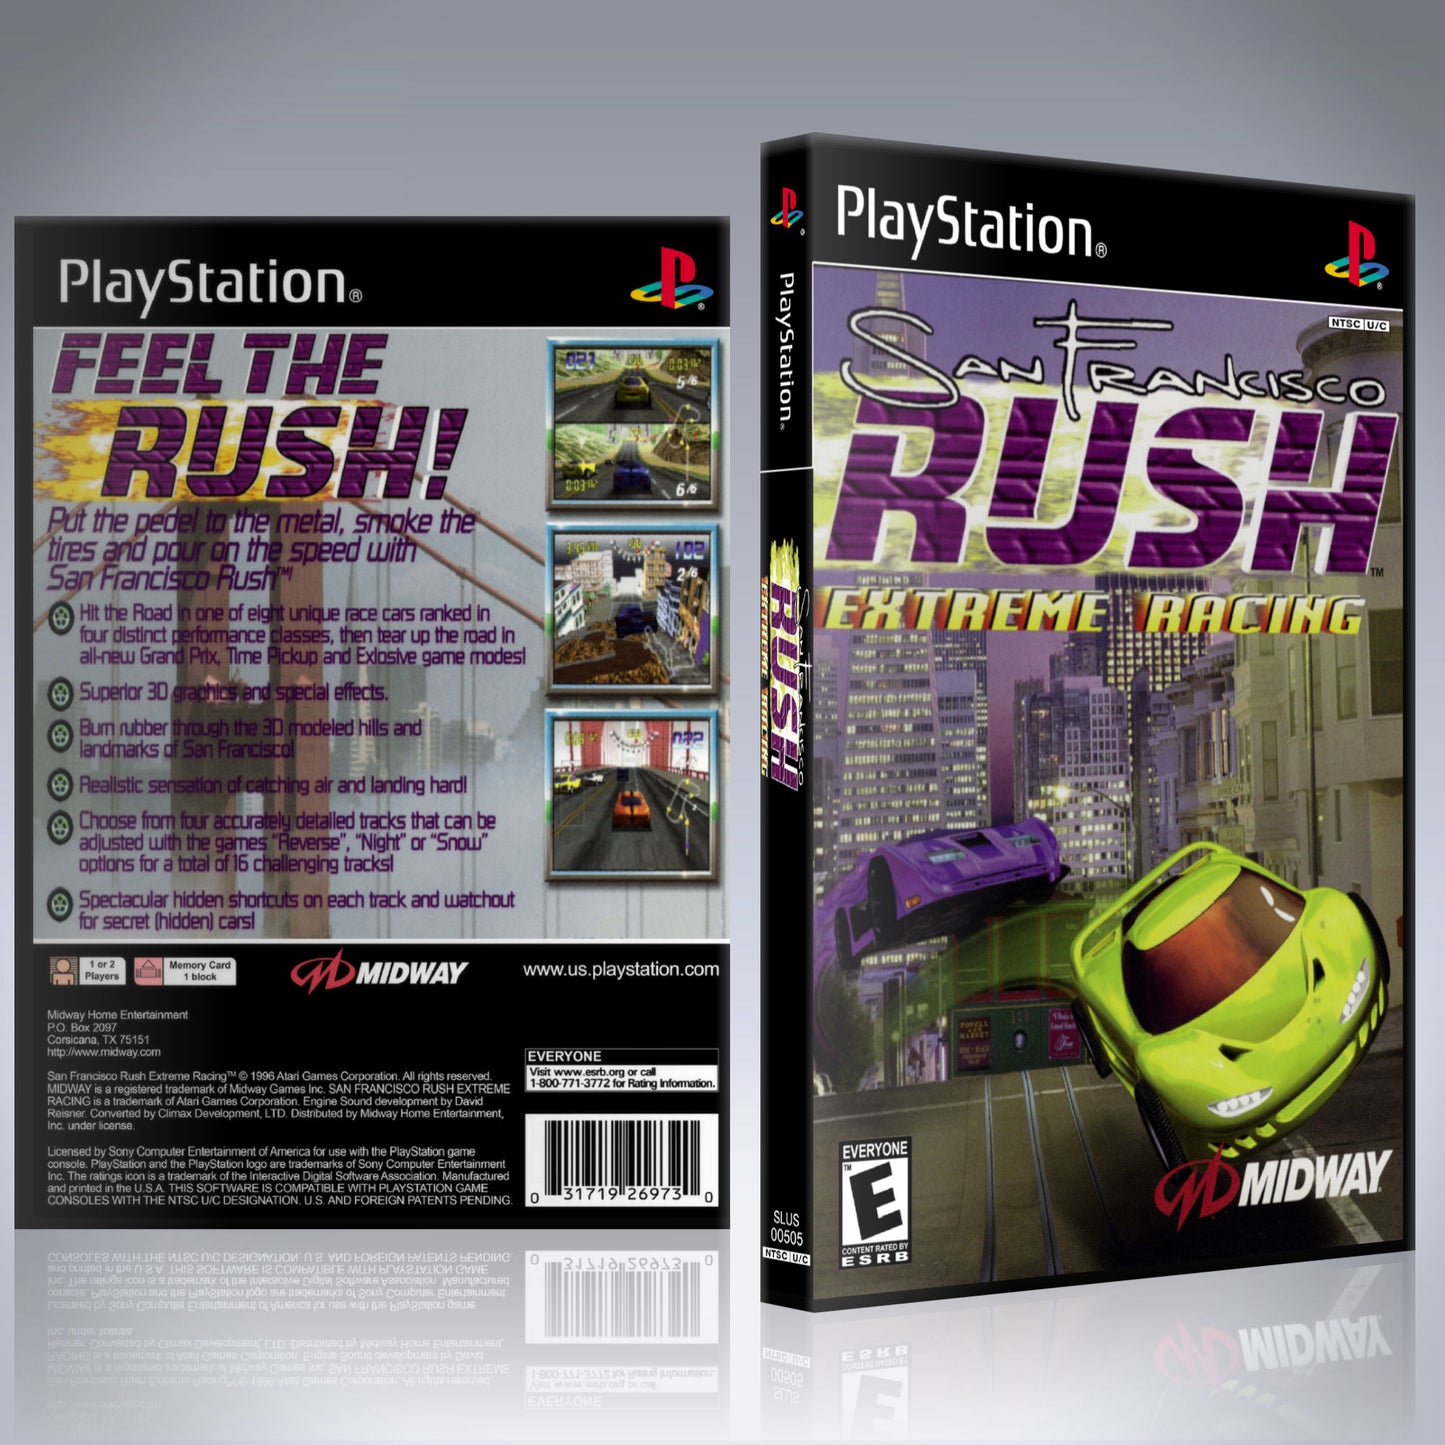 PS1 Case - NO GAME - San Francisco Rush - Extreme Racing